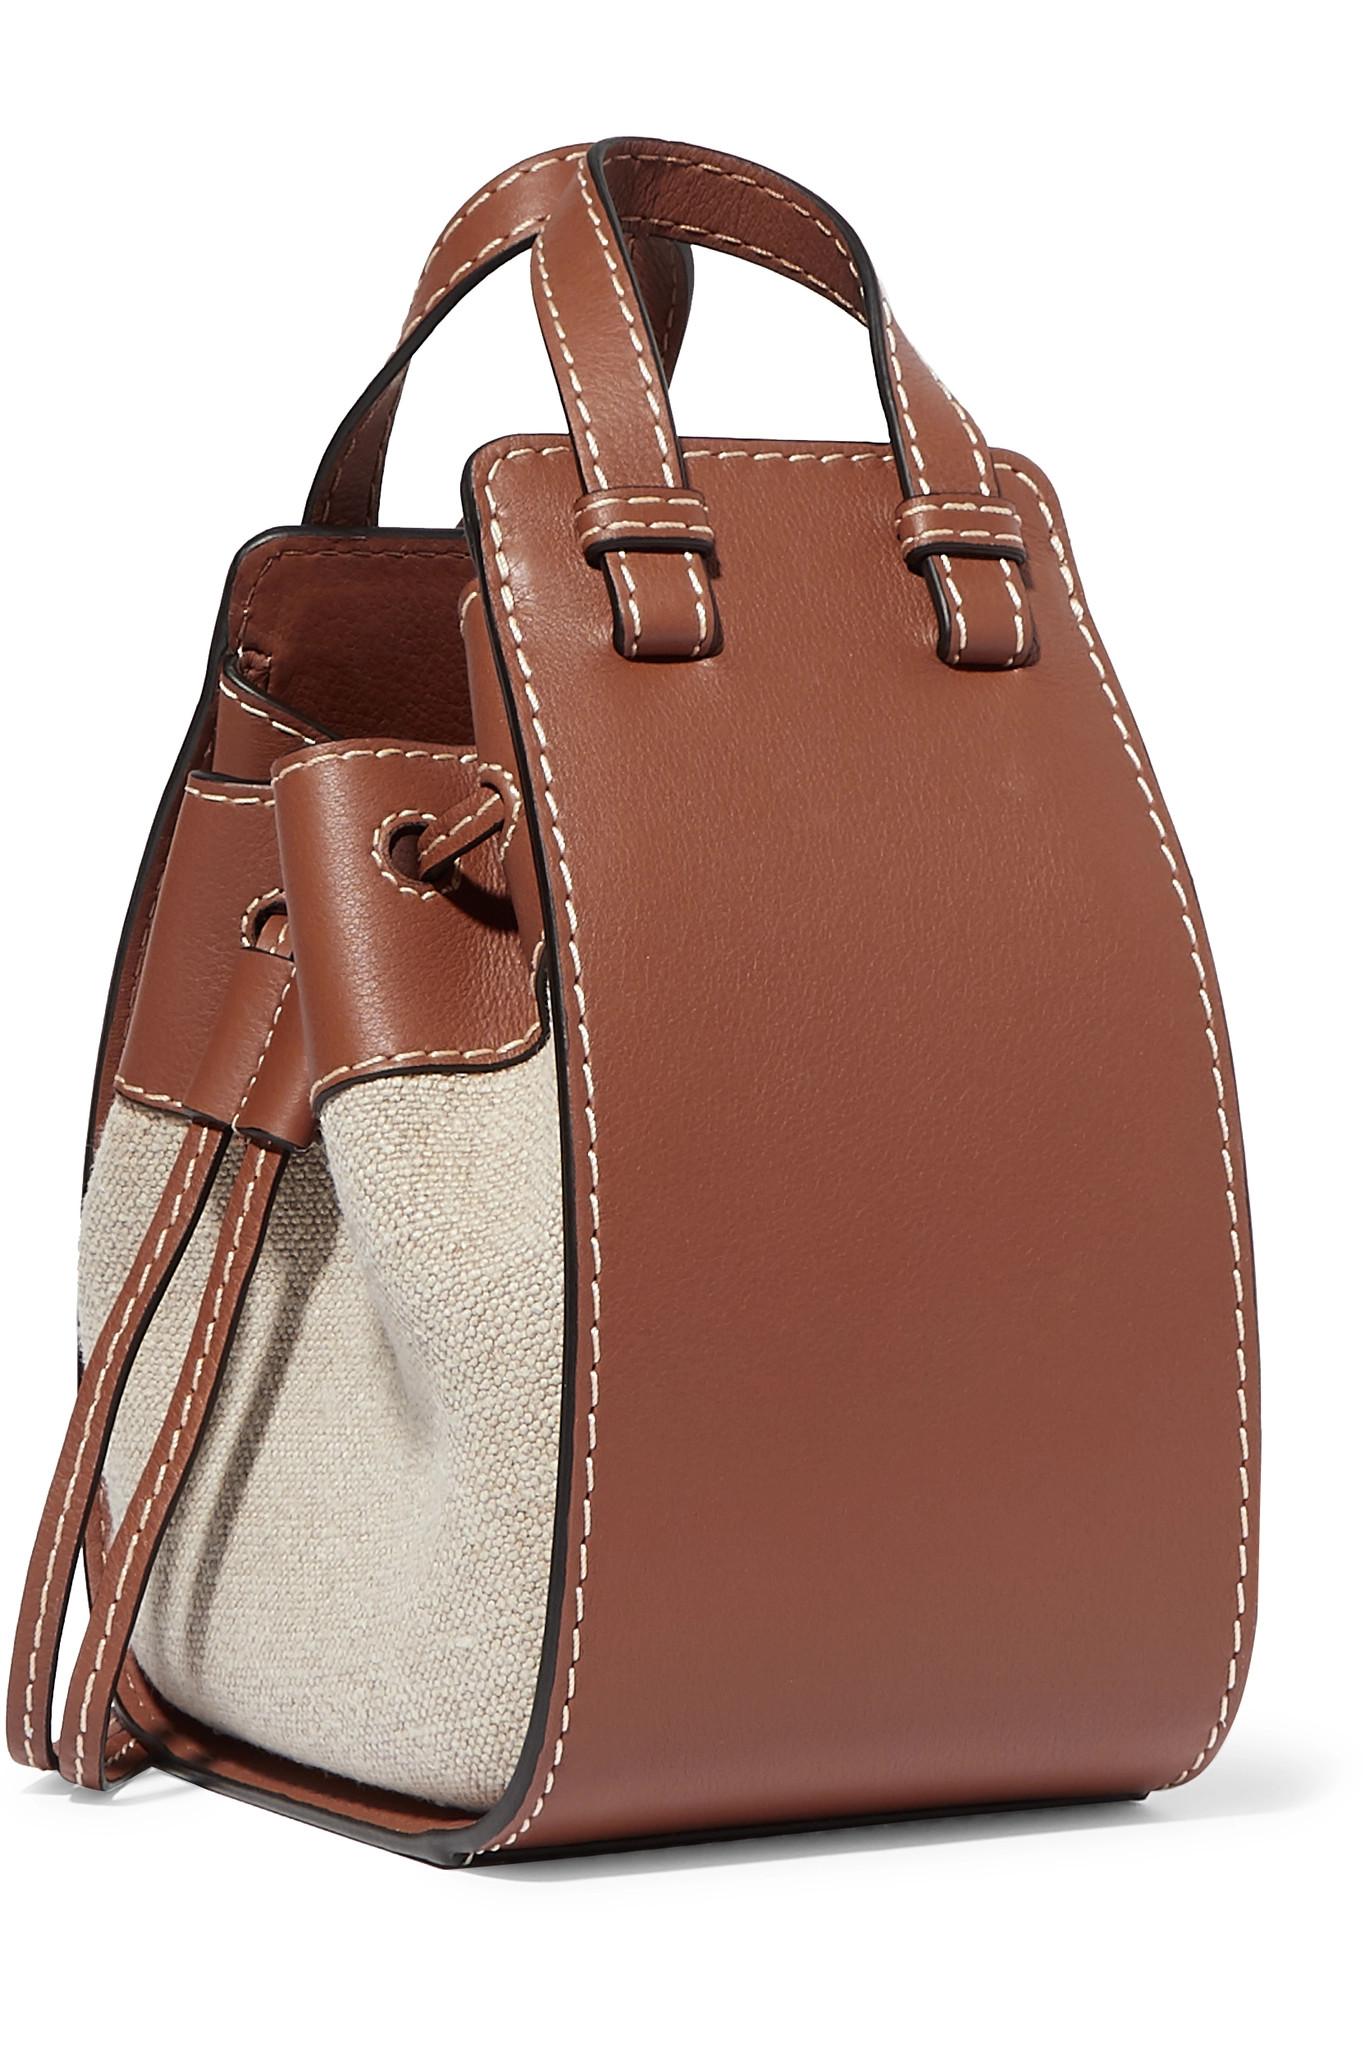 LOEWE - Hammock small leather shoulder bag